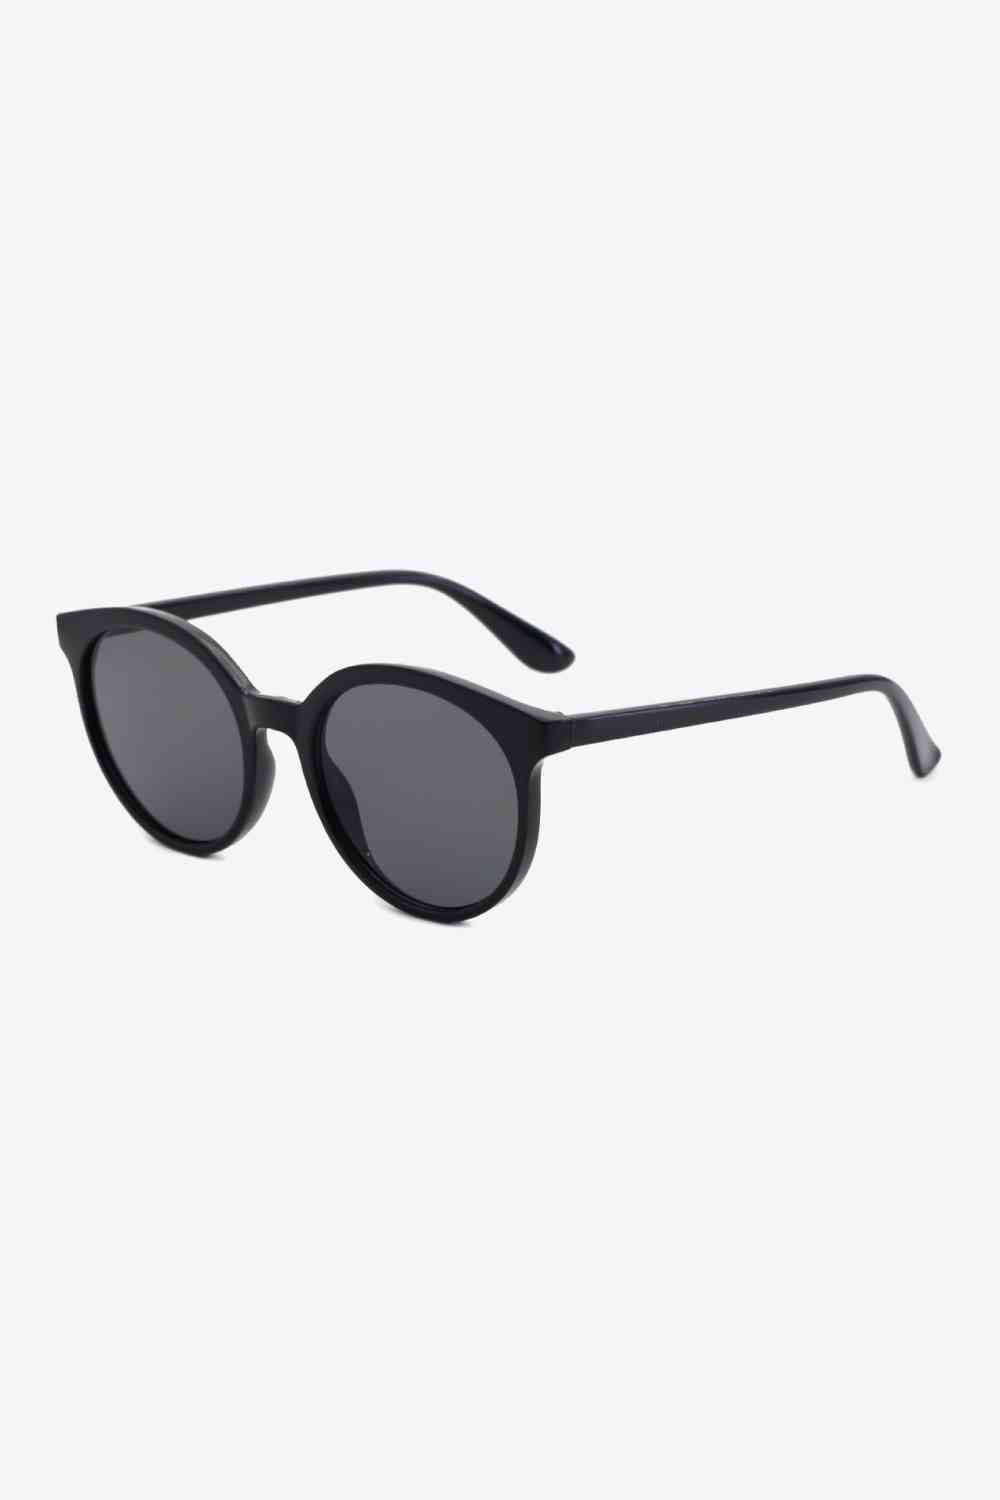 Round Full Rim Polycarbonate Frame Sunglasses - SELFTRITSS